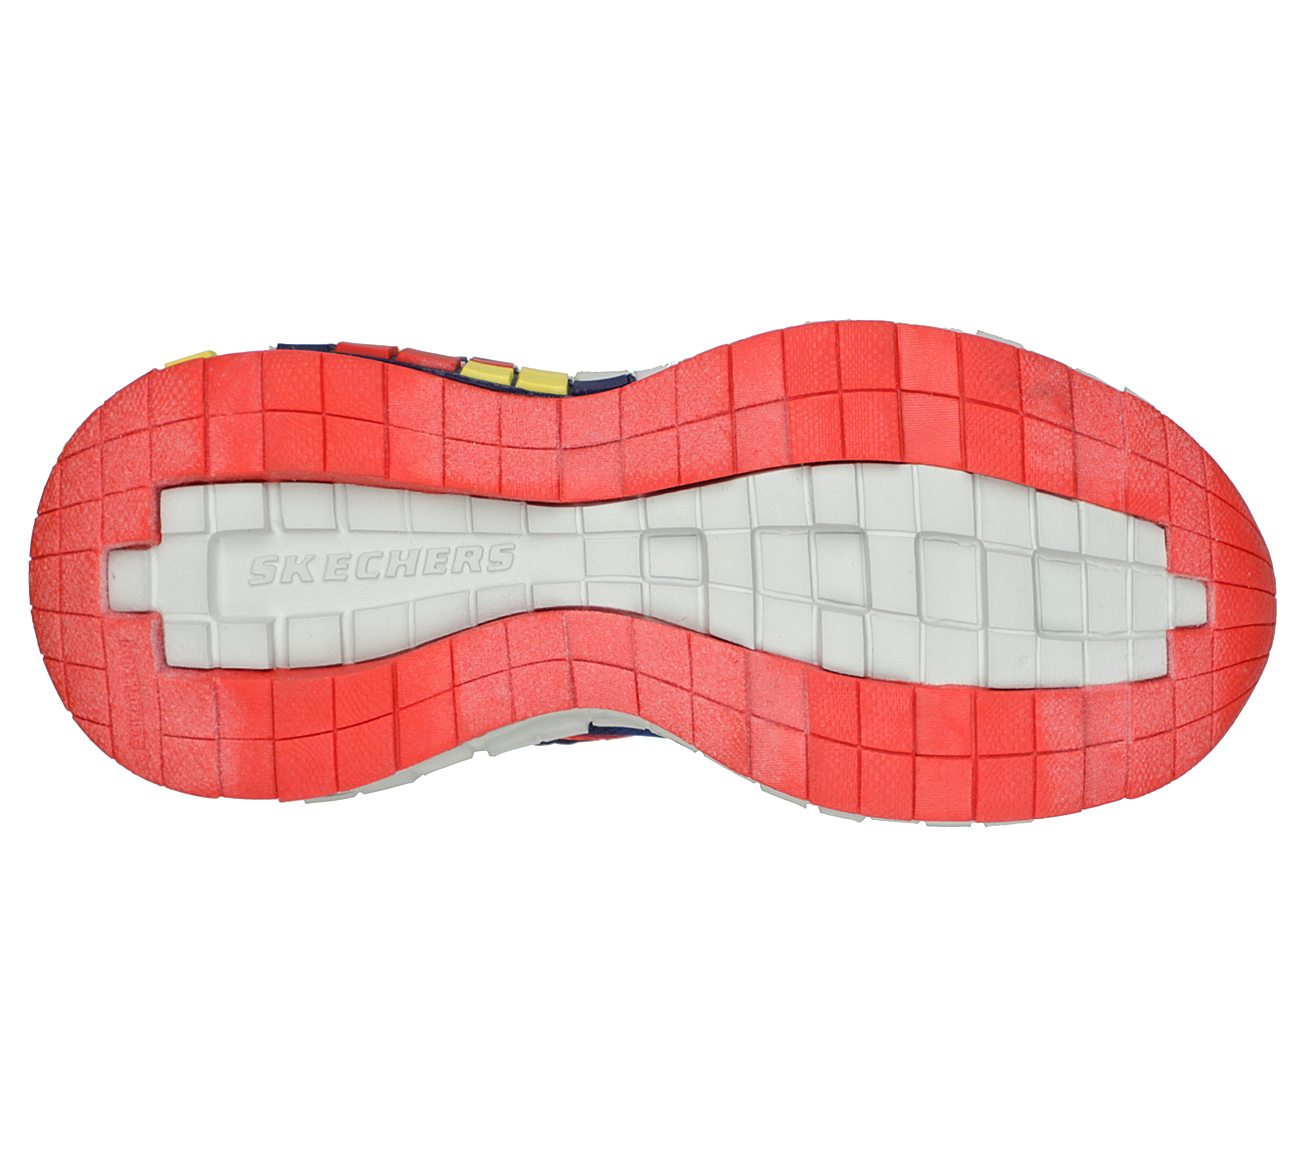 MEGA-CRAFT - CUBOZONE, NAVY/RED Footwear Bottom View